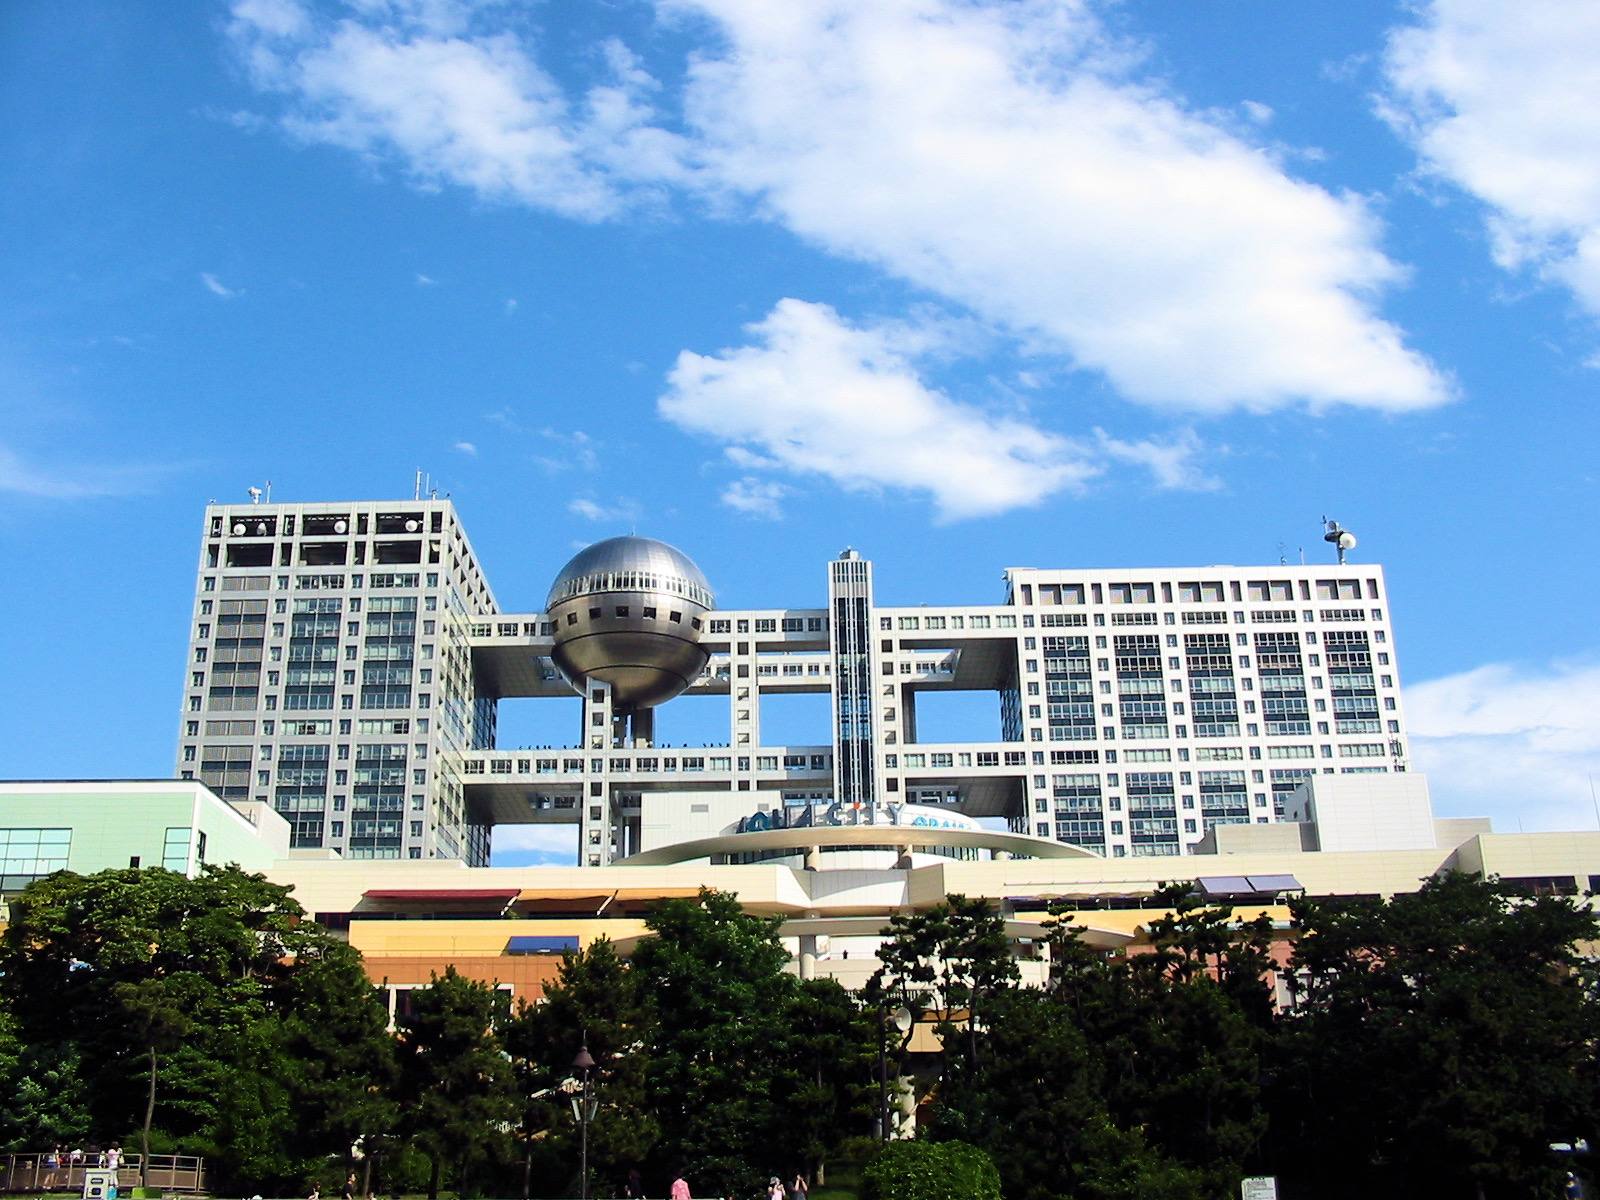 Photo of Fuji TV Hachitama Observation Deck, Japan (Le bâtiment de Fuji TV, à Odaiba - Fuji TV building.kmz Locate this place (requires Google Earth) by Stéfan Le Dû from Nantes, France)